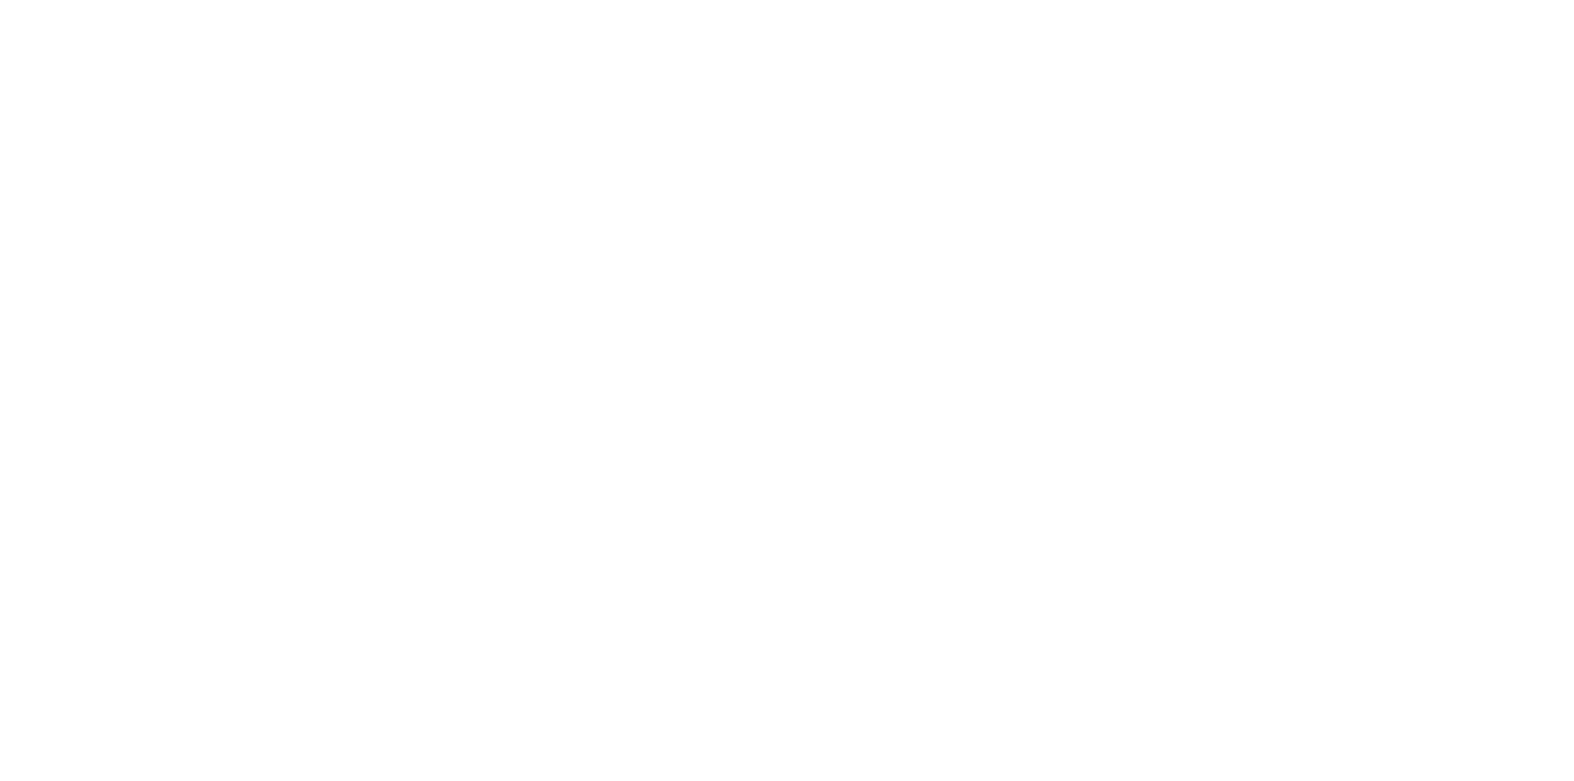 Text (LiveChat) logo large for dark backgrounds (transparent PNG)